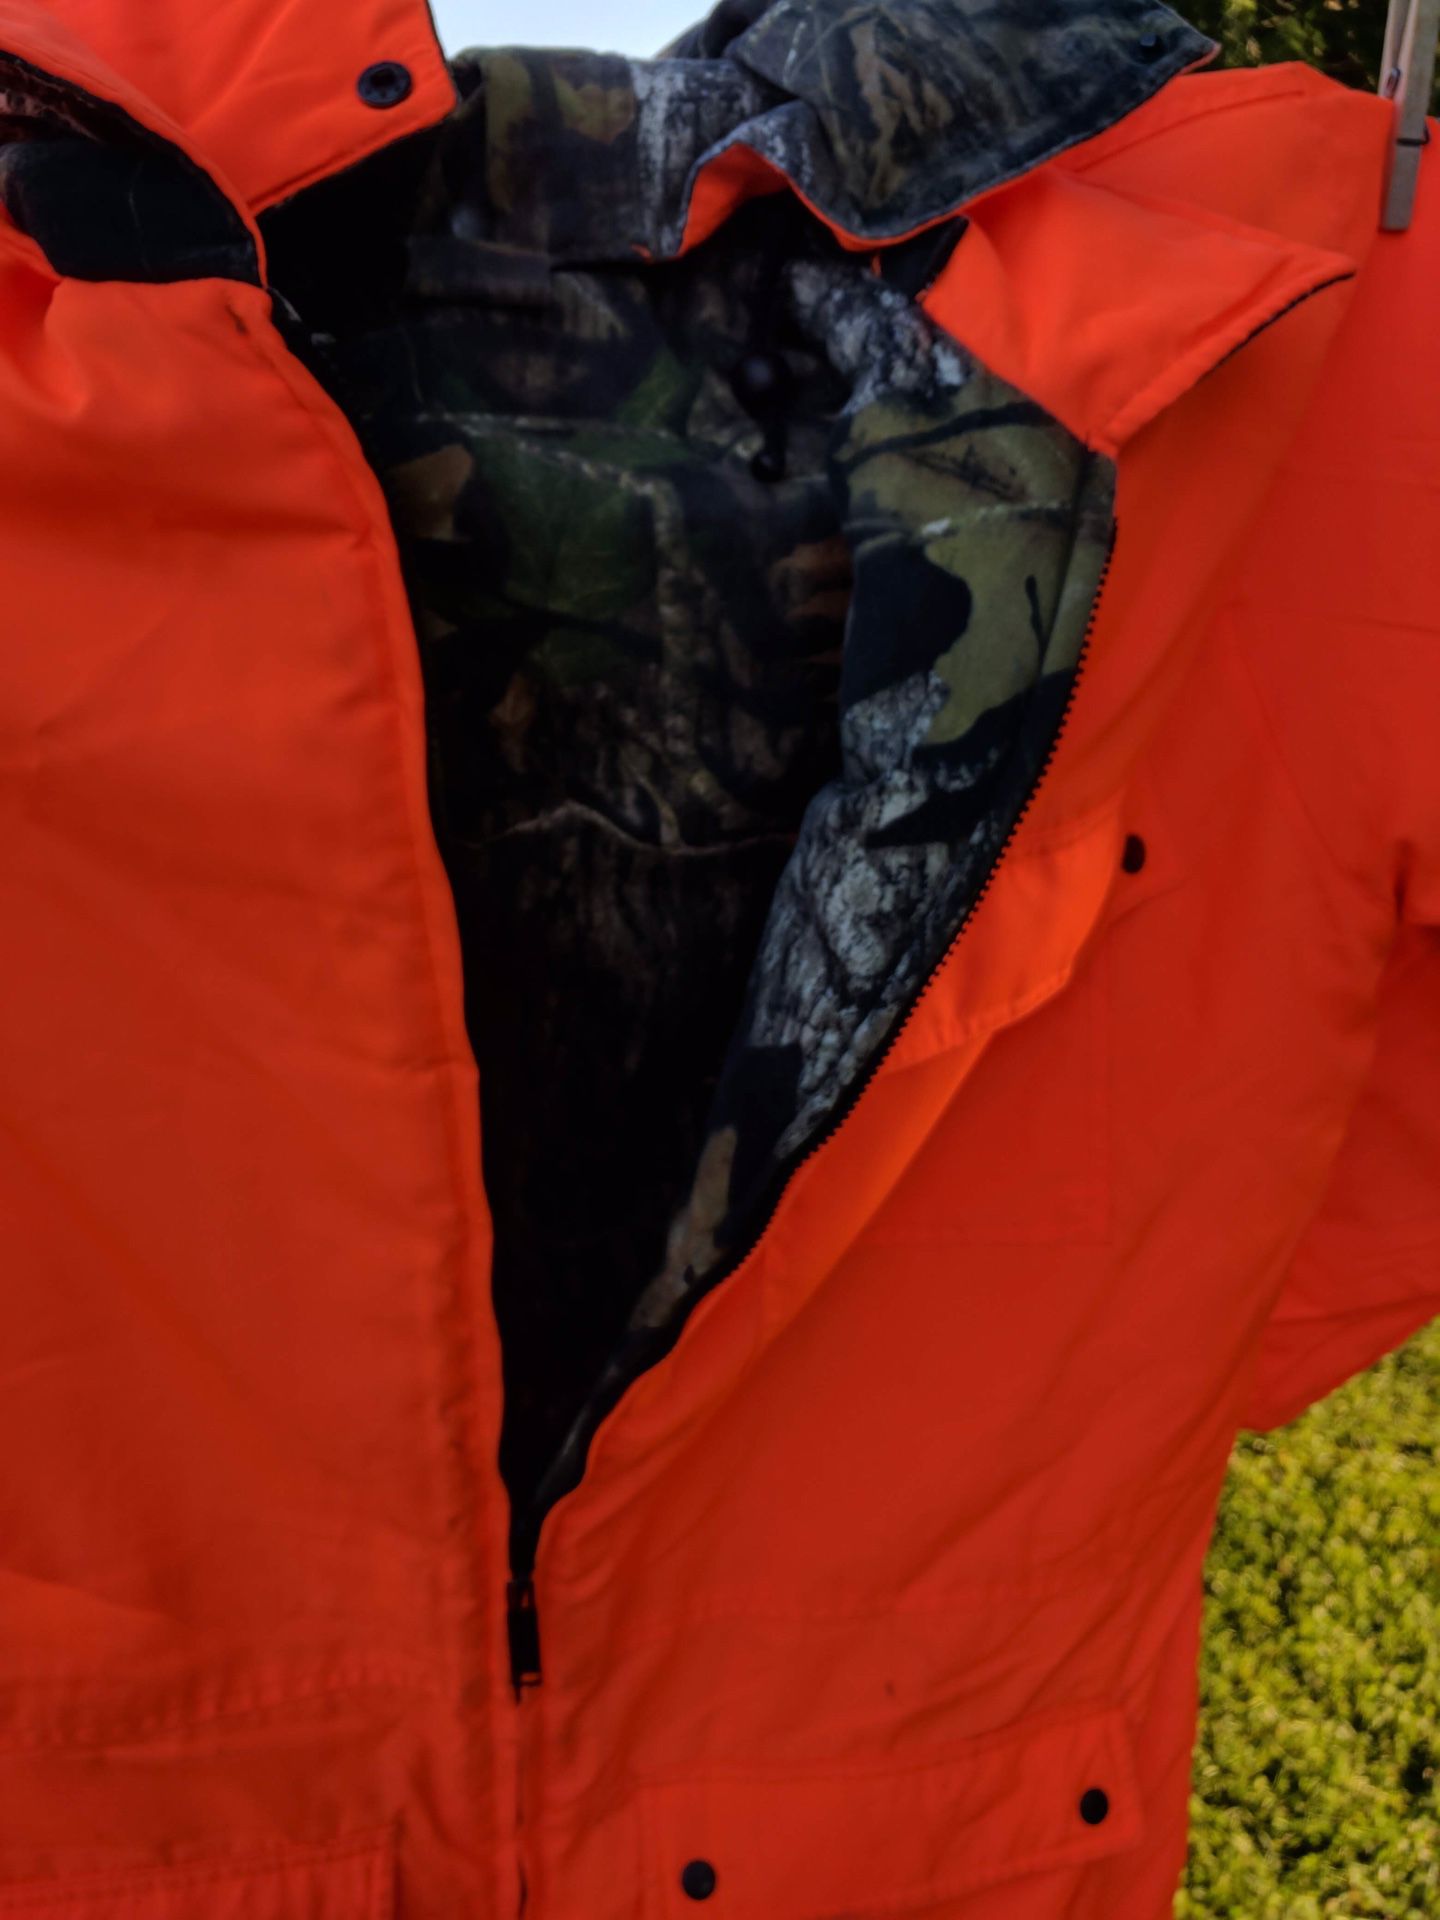 Reversible hunting Coveralls, size XL orange & camo.  